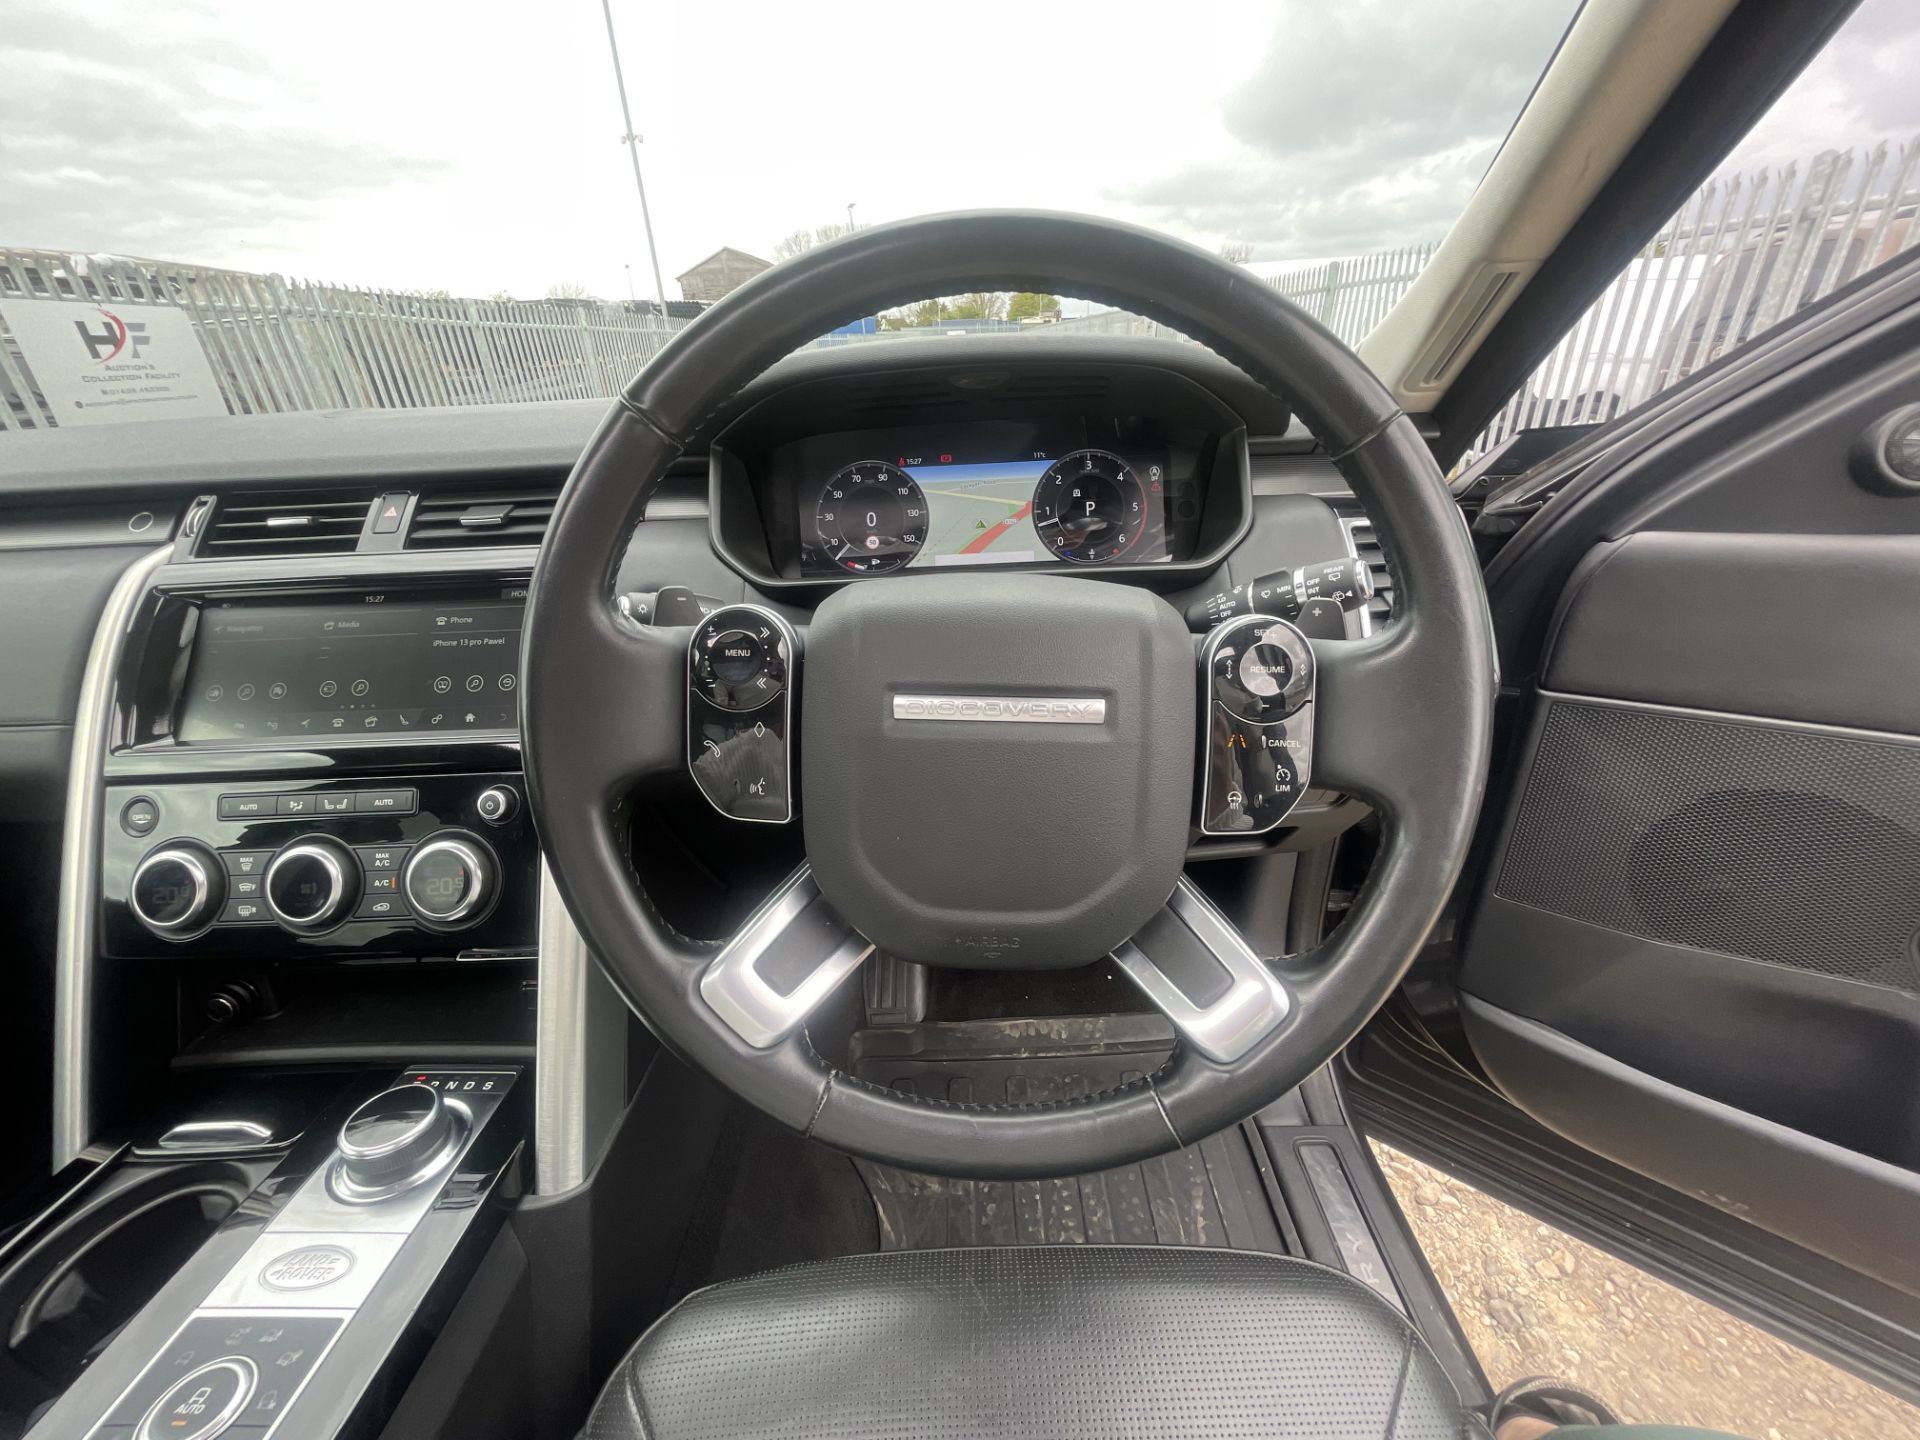 ** ON SALE ** Land Rover Discovery Luxury HSE 3.0 SDV6 306 2020 '70 Reg'-Sat/Nav-A/C-ULEZ Compliant - Image 18 of 40